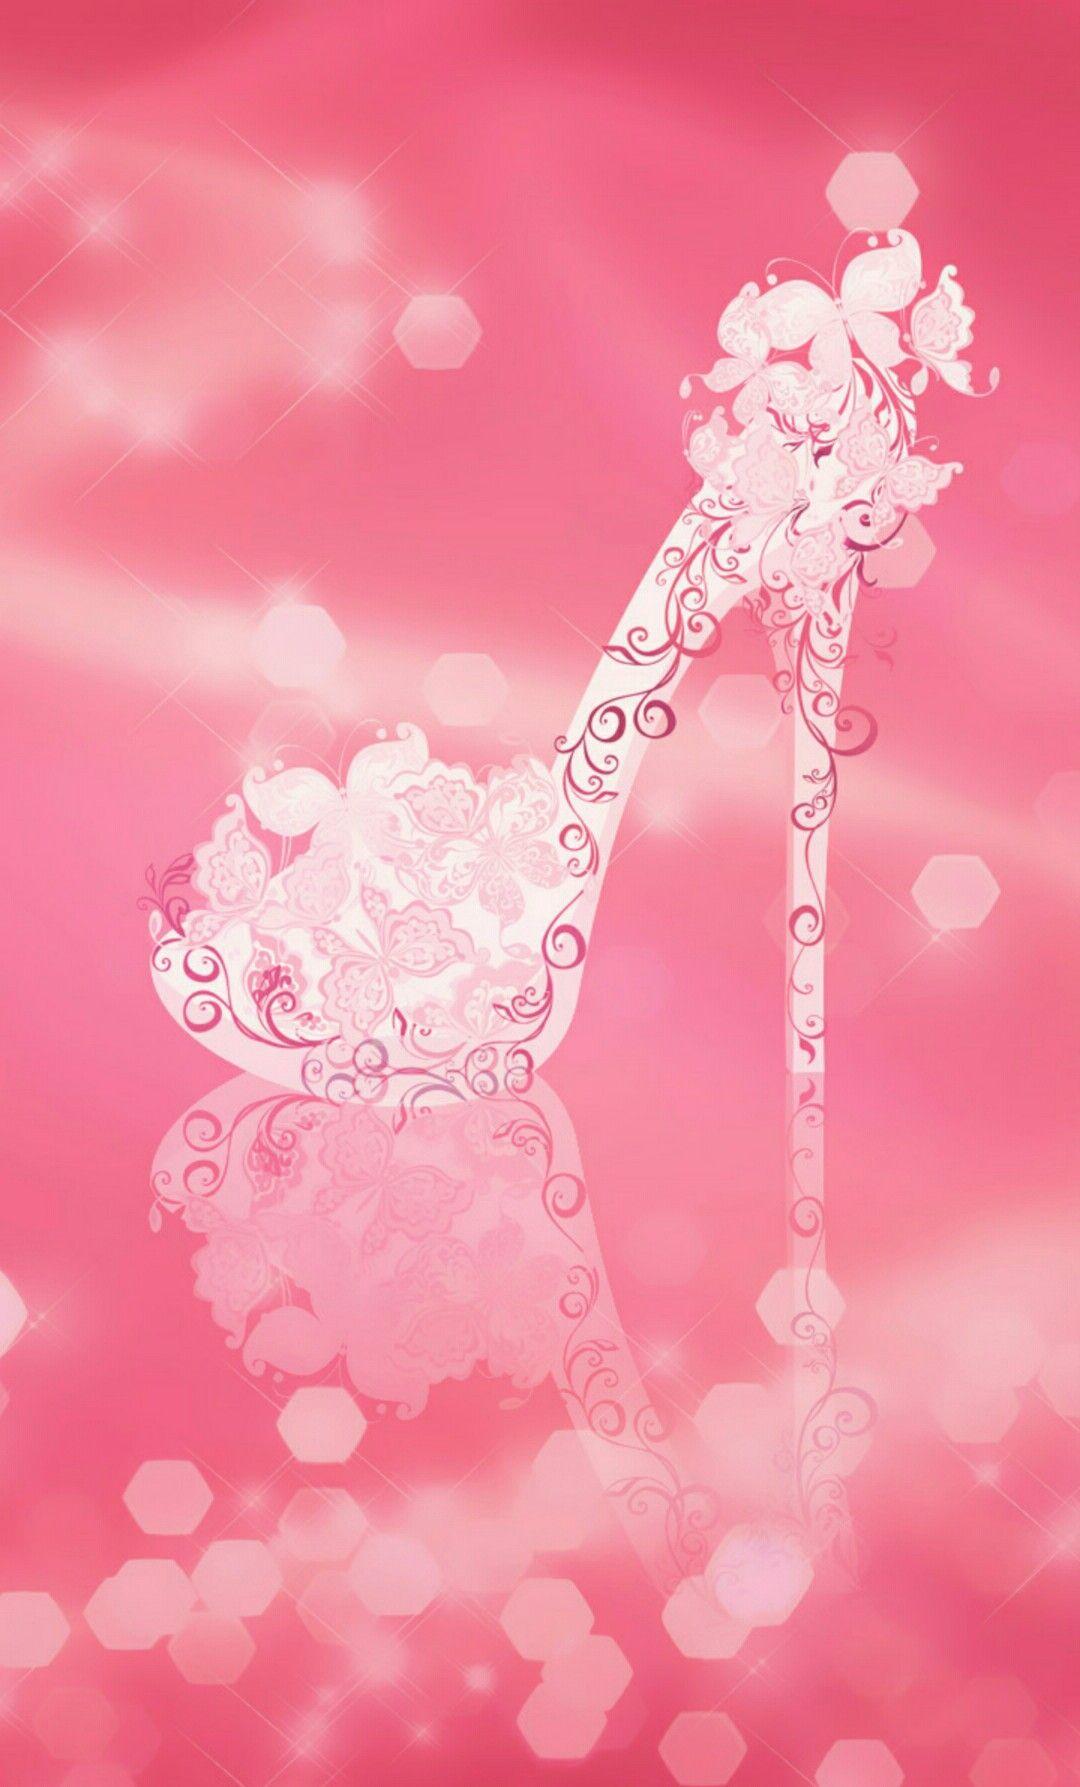 High Heel on Pink Wallpaper.By Artist Unknown. Phone wallpaper image, Cute girl wallpaper, Wallpaper background